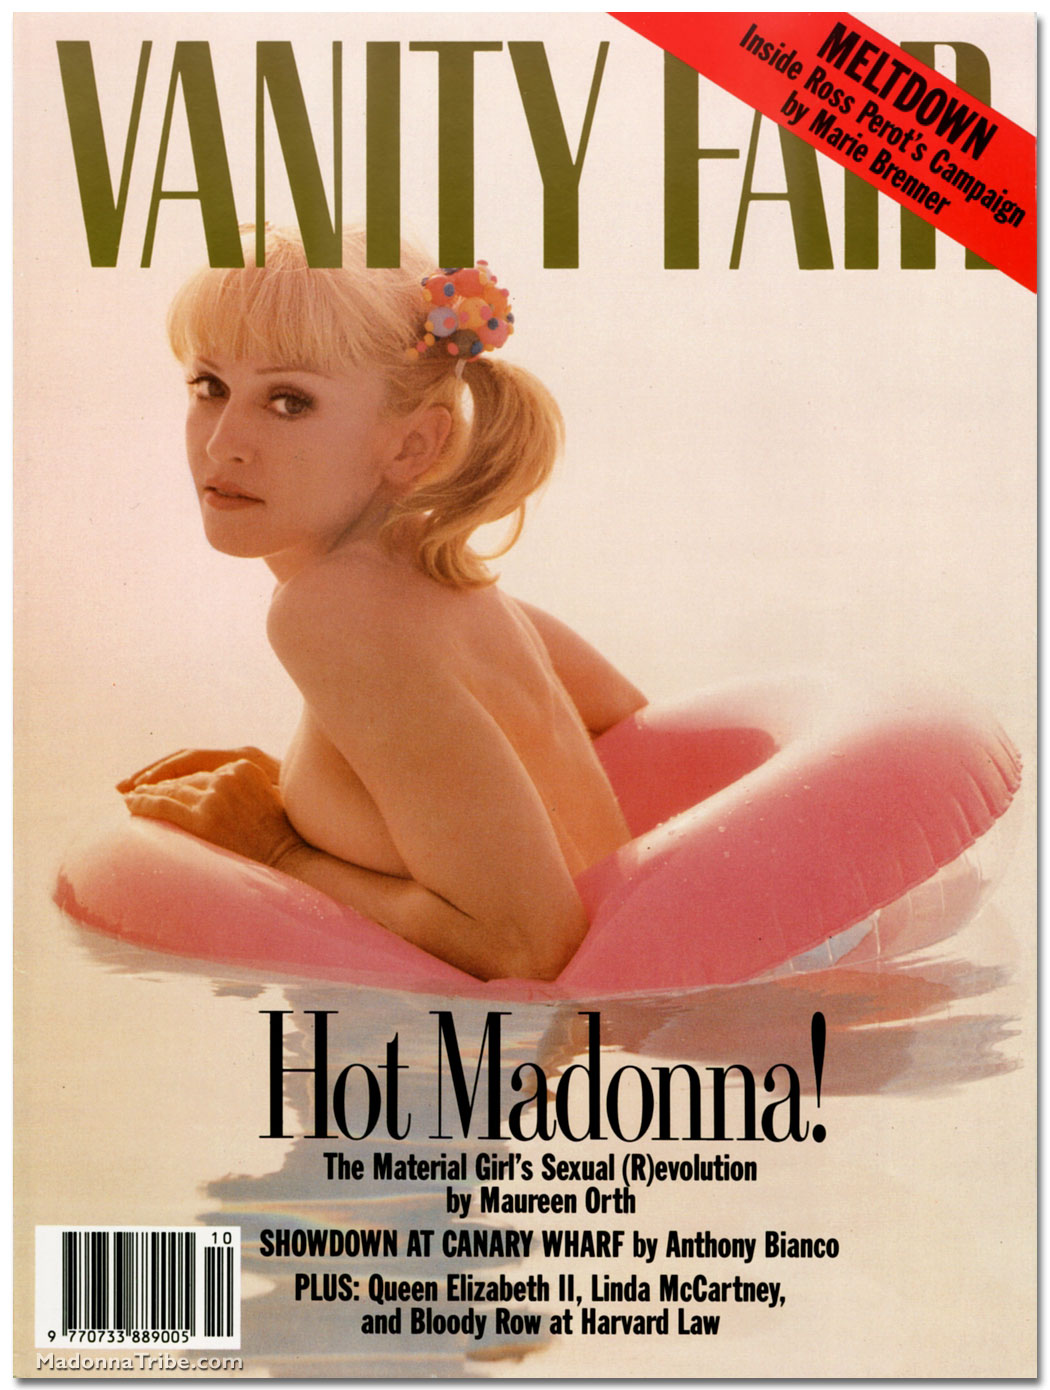 http://4.bp.blogspot.com/-XmeyOelBdE4/TzKYS7FnFyI/AAAAAAAAIcI/VGtzEZAn0es/s1600/Steven+Meisel+%C3%97+Madonna+-+Vanity+Fair+October+1992+-+Madonna+in+Wonderland+-+cover.jpg